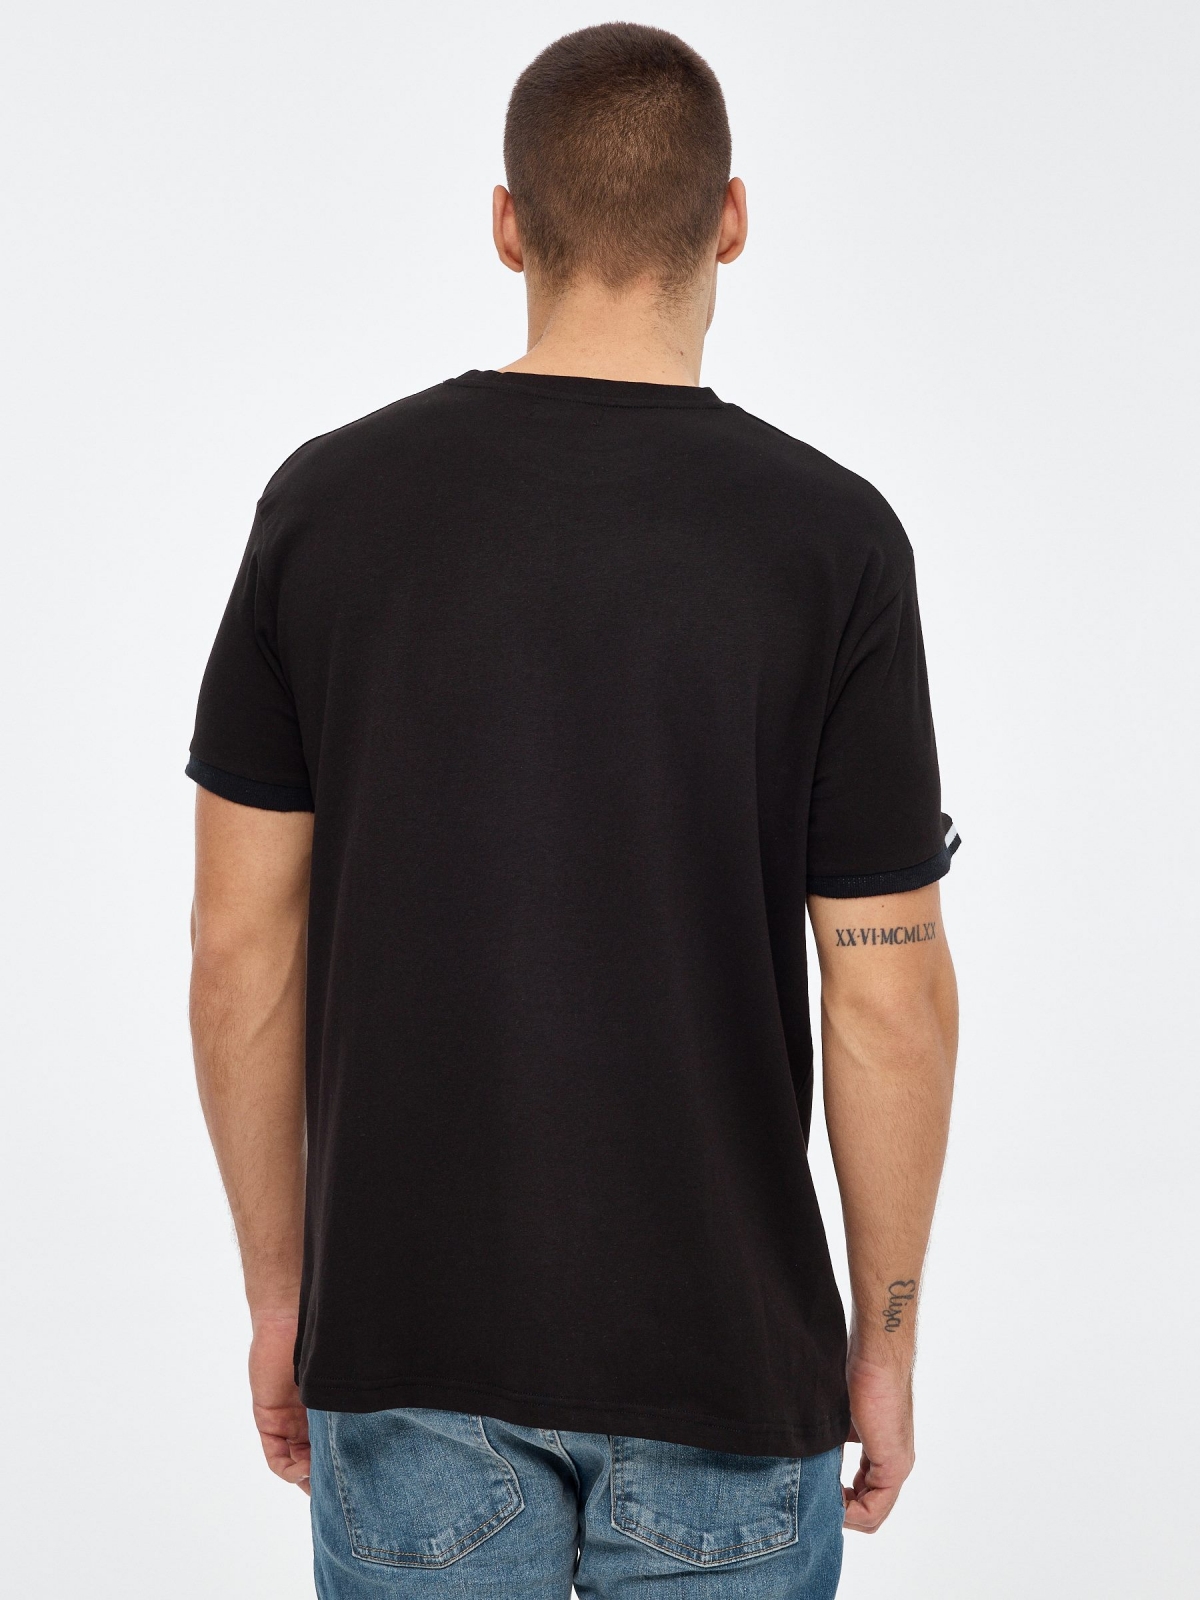 Camiseta estampado texto negro vista media trasera